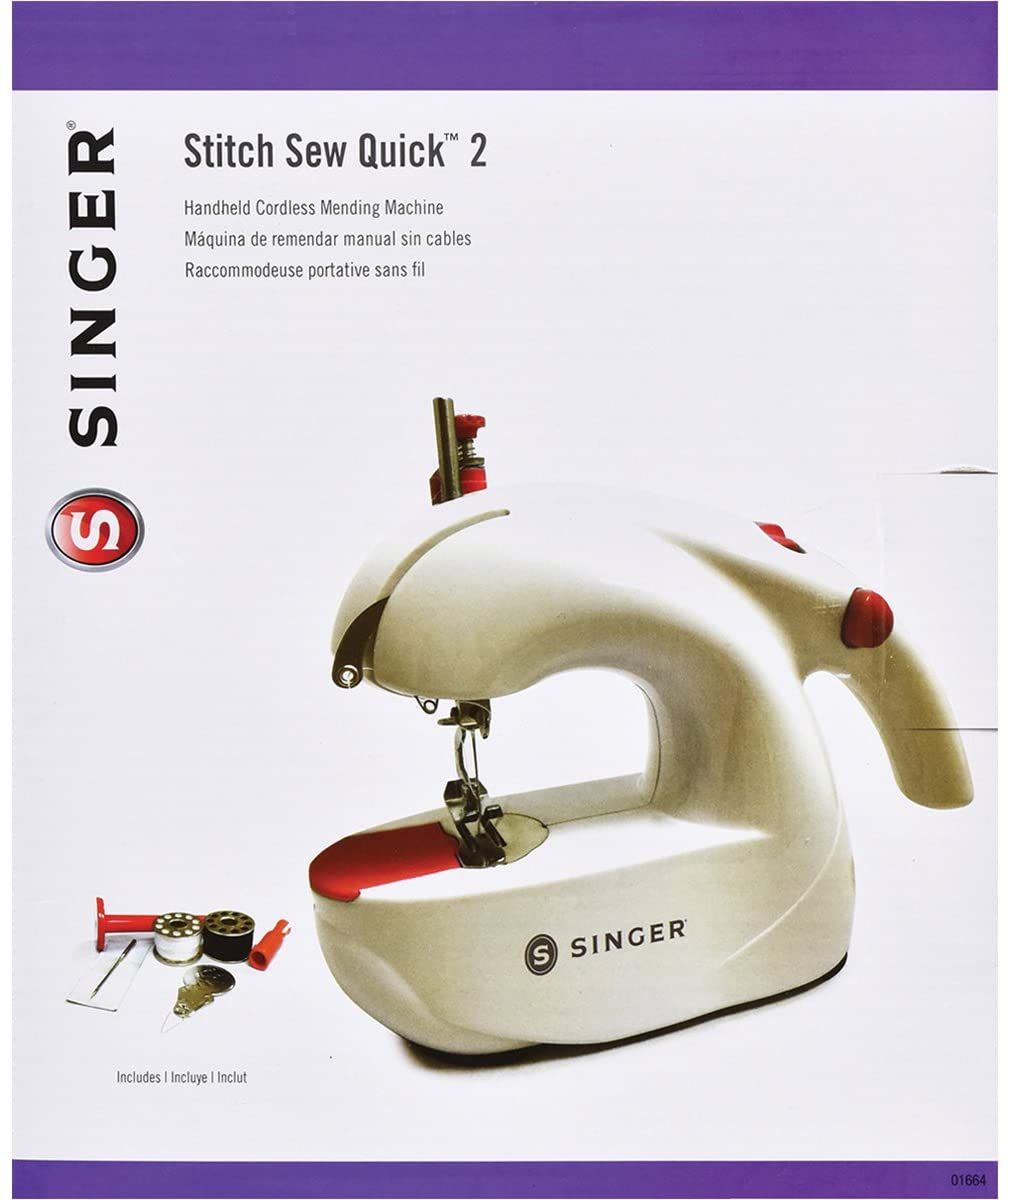 Singer Stitch Sew Quick 2